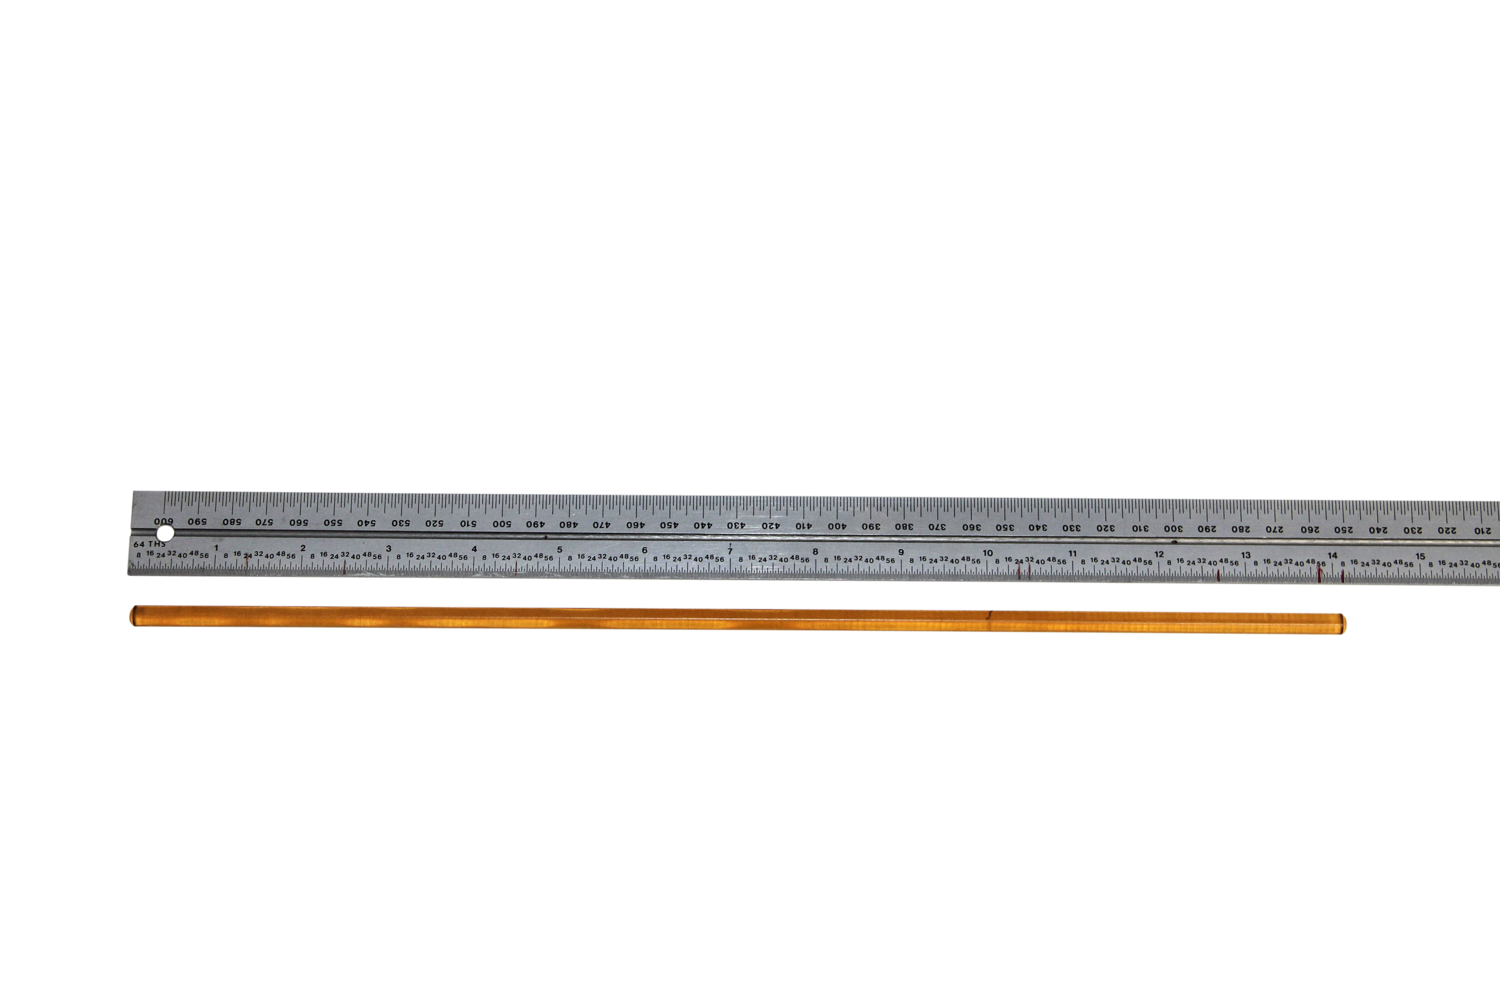 2CNA-1191 Centralizer Rods, 35.5 cm (14 inch) long